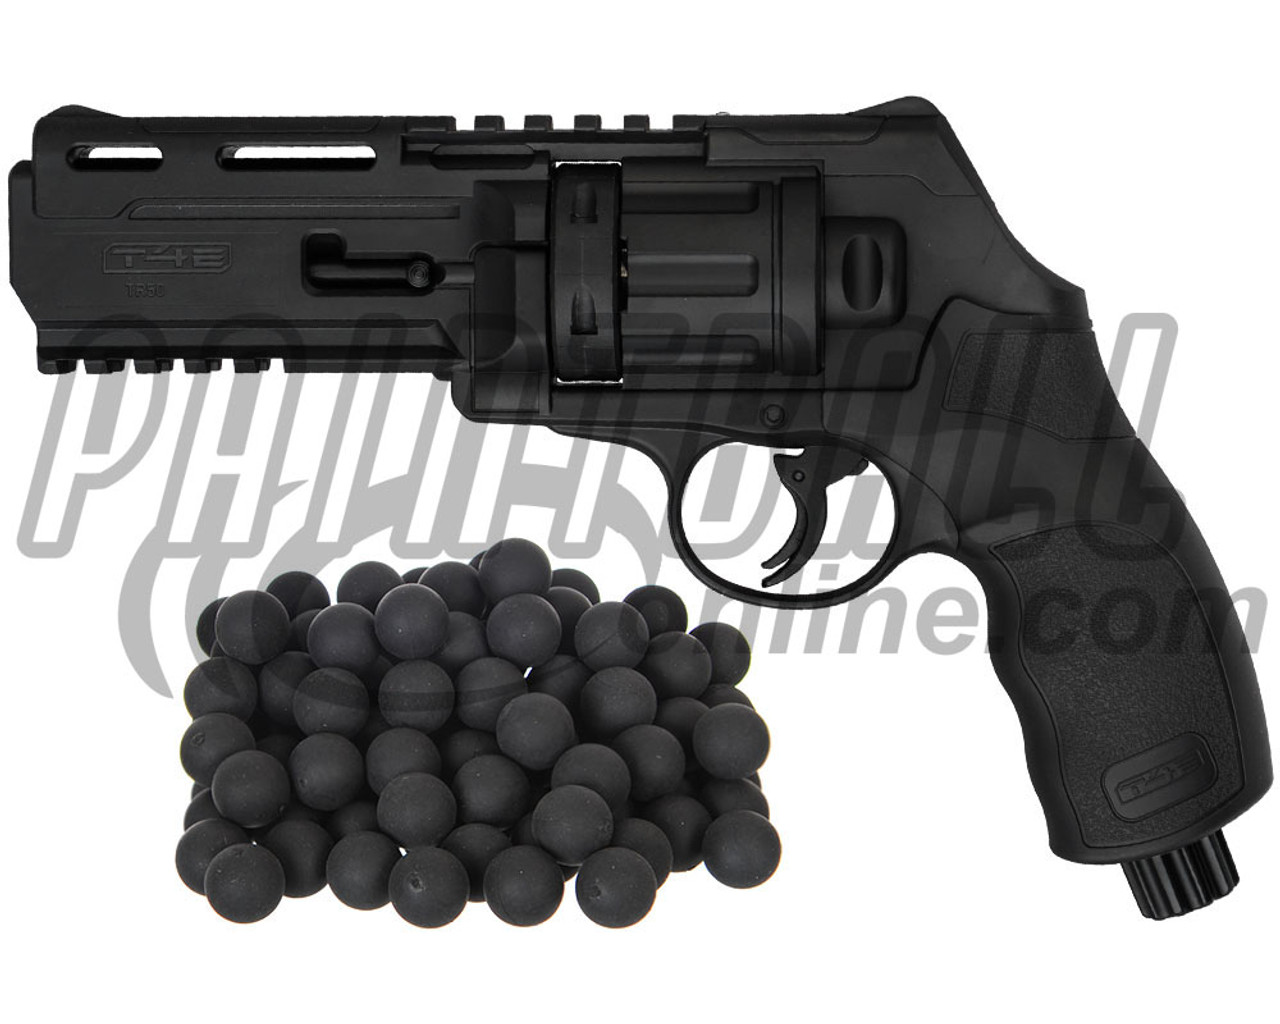 Gun Metal BB revolver - 8 inch - Black Ops USA